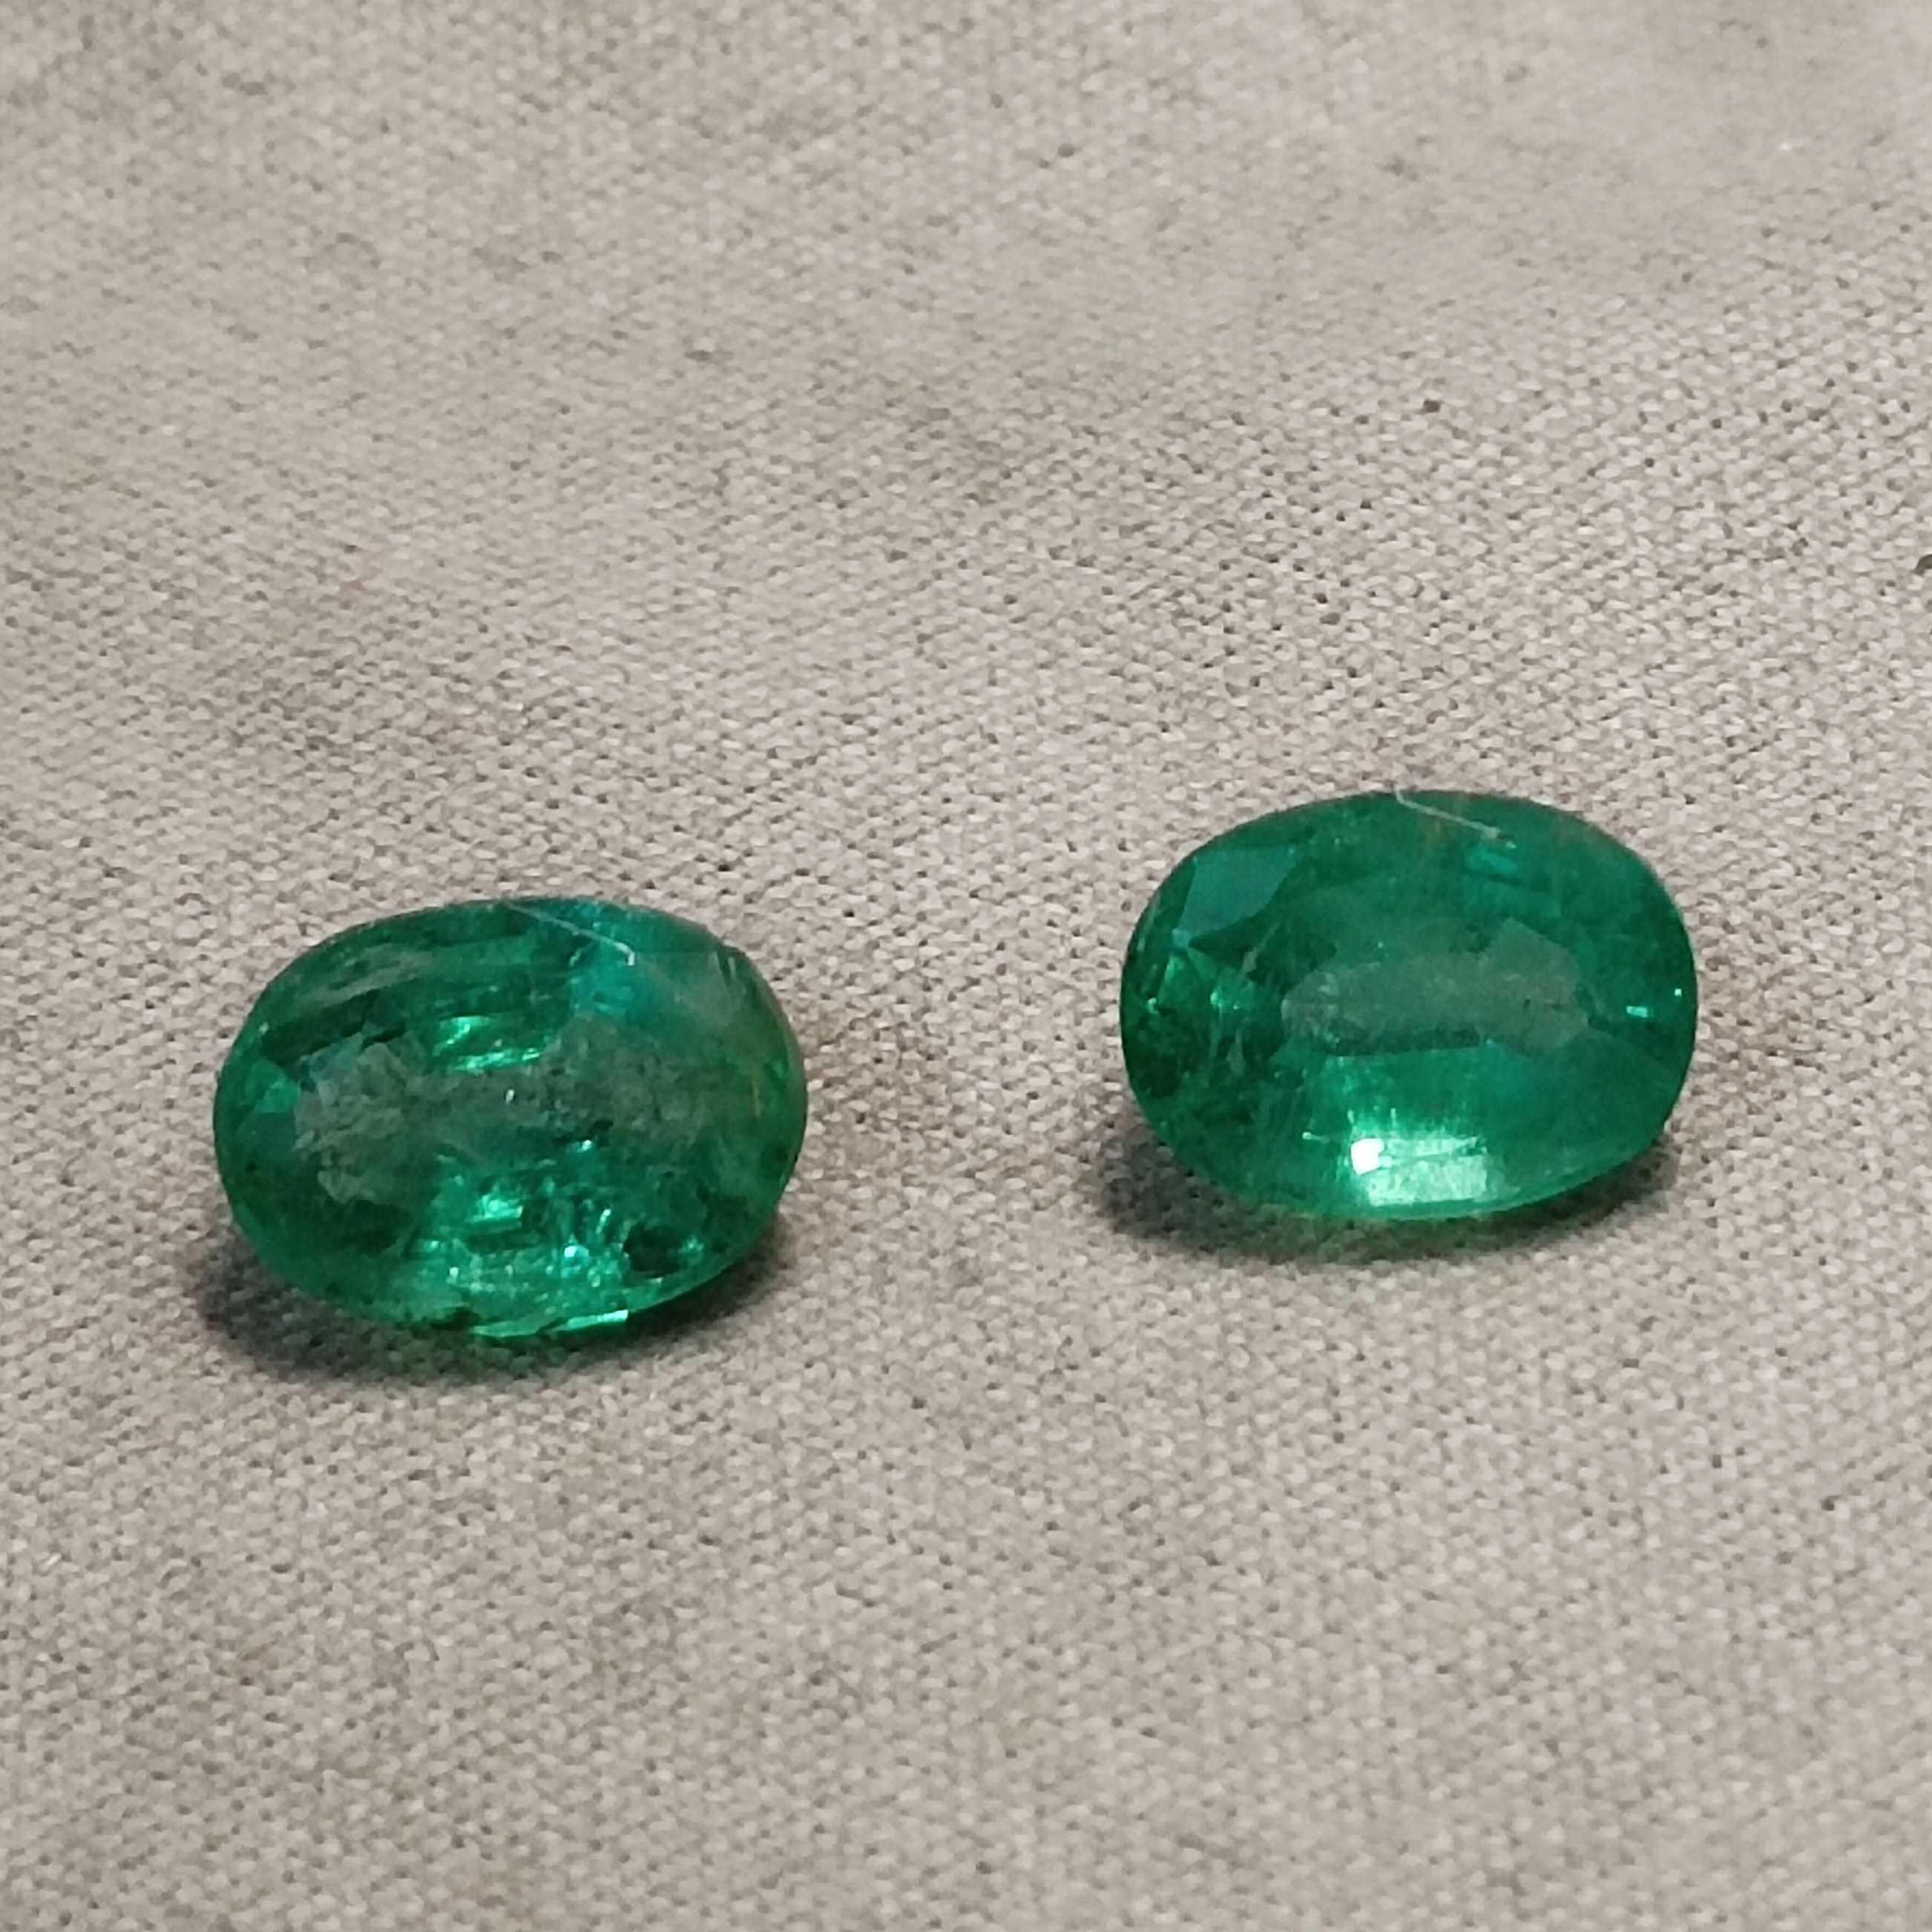 3.55ct vivid green oval mix cut emerald pair